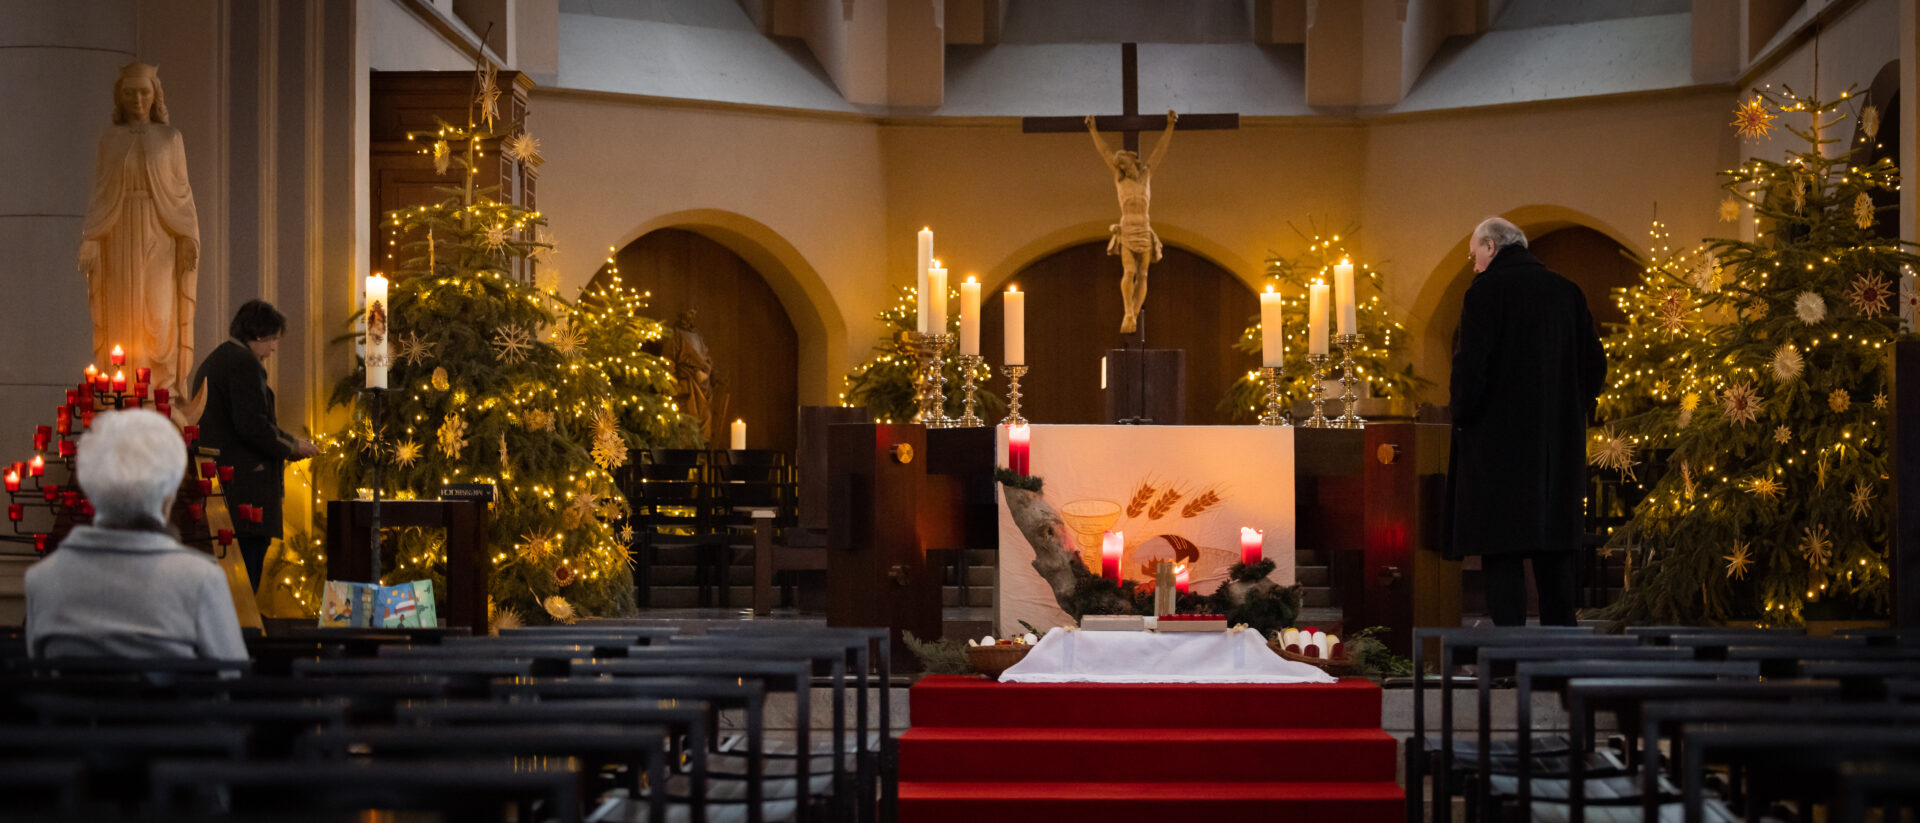 It's still Christmas time in the parish church in Schaan FL.